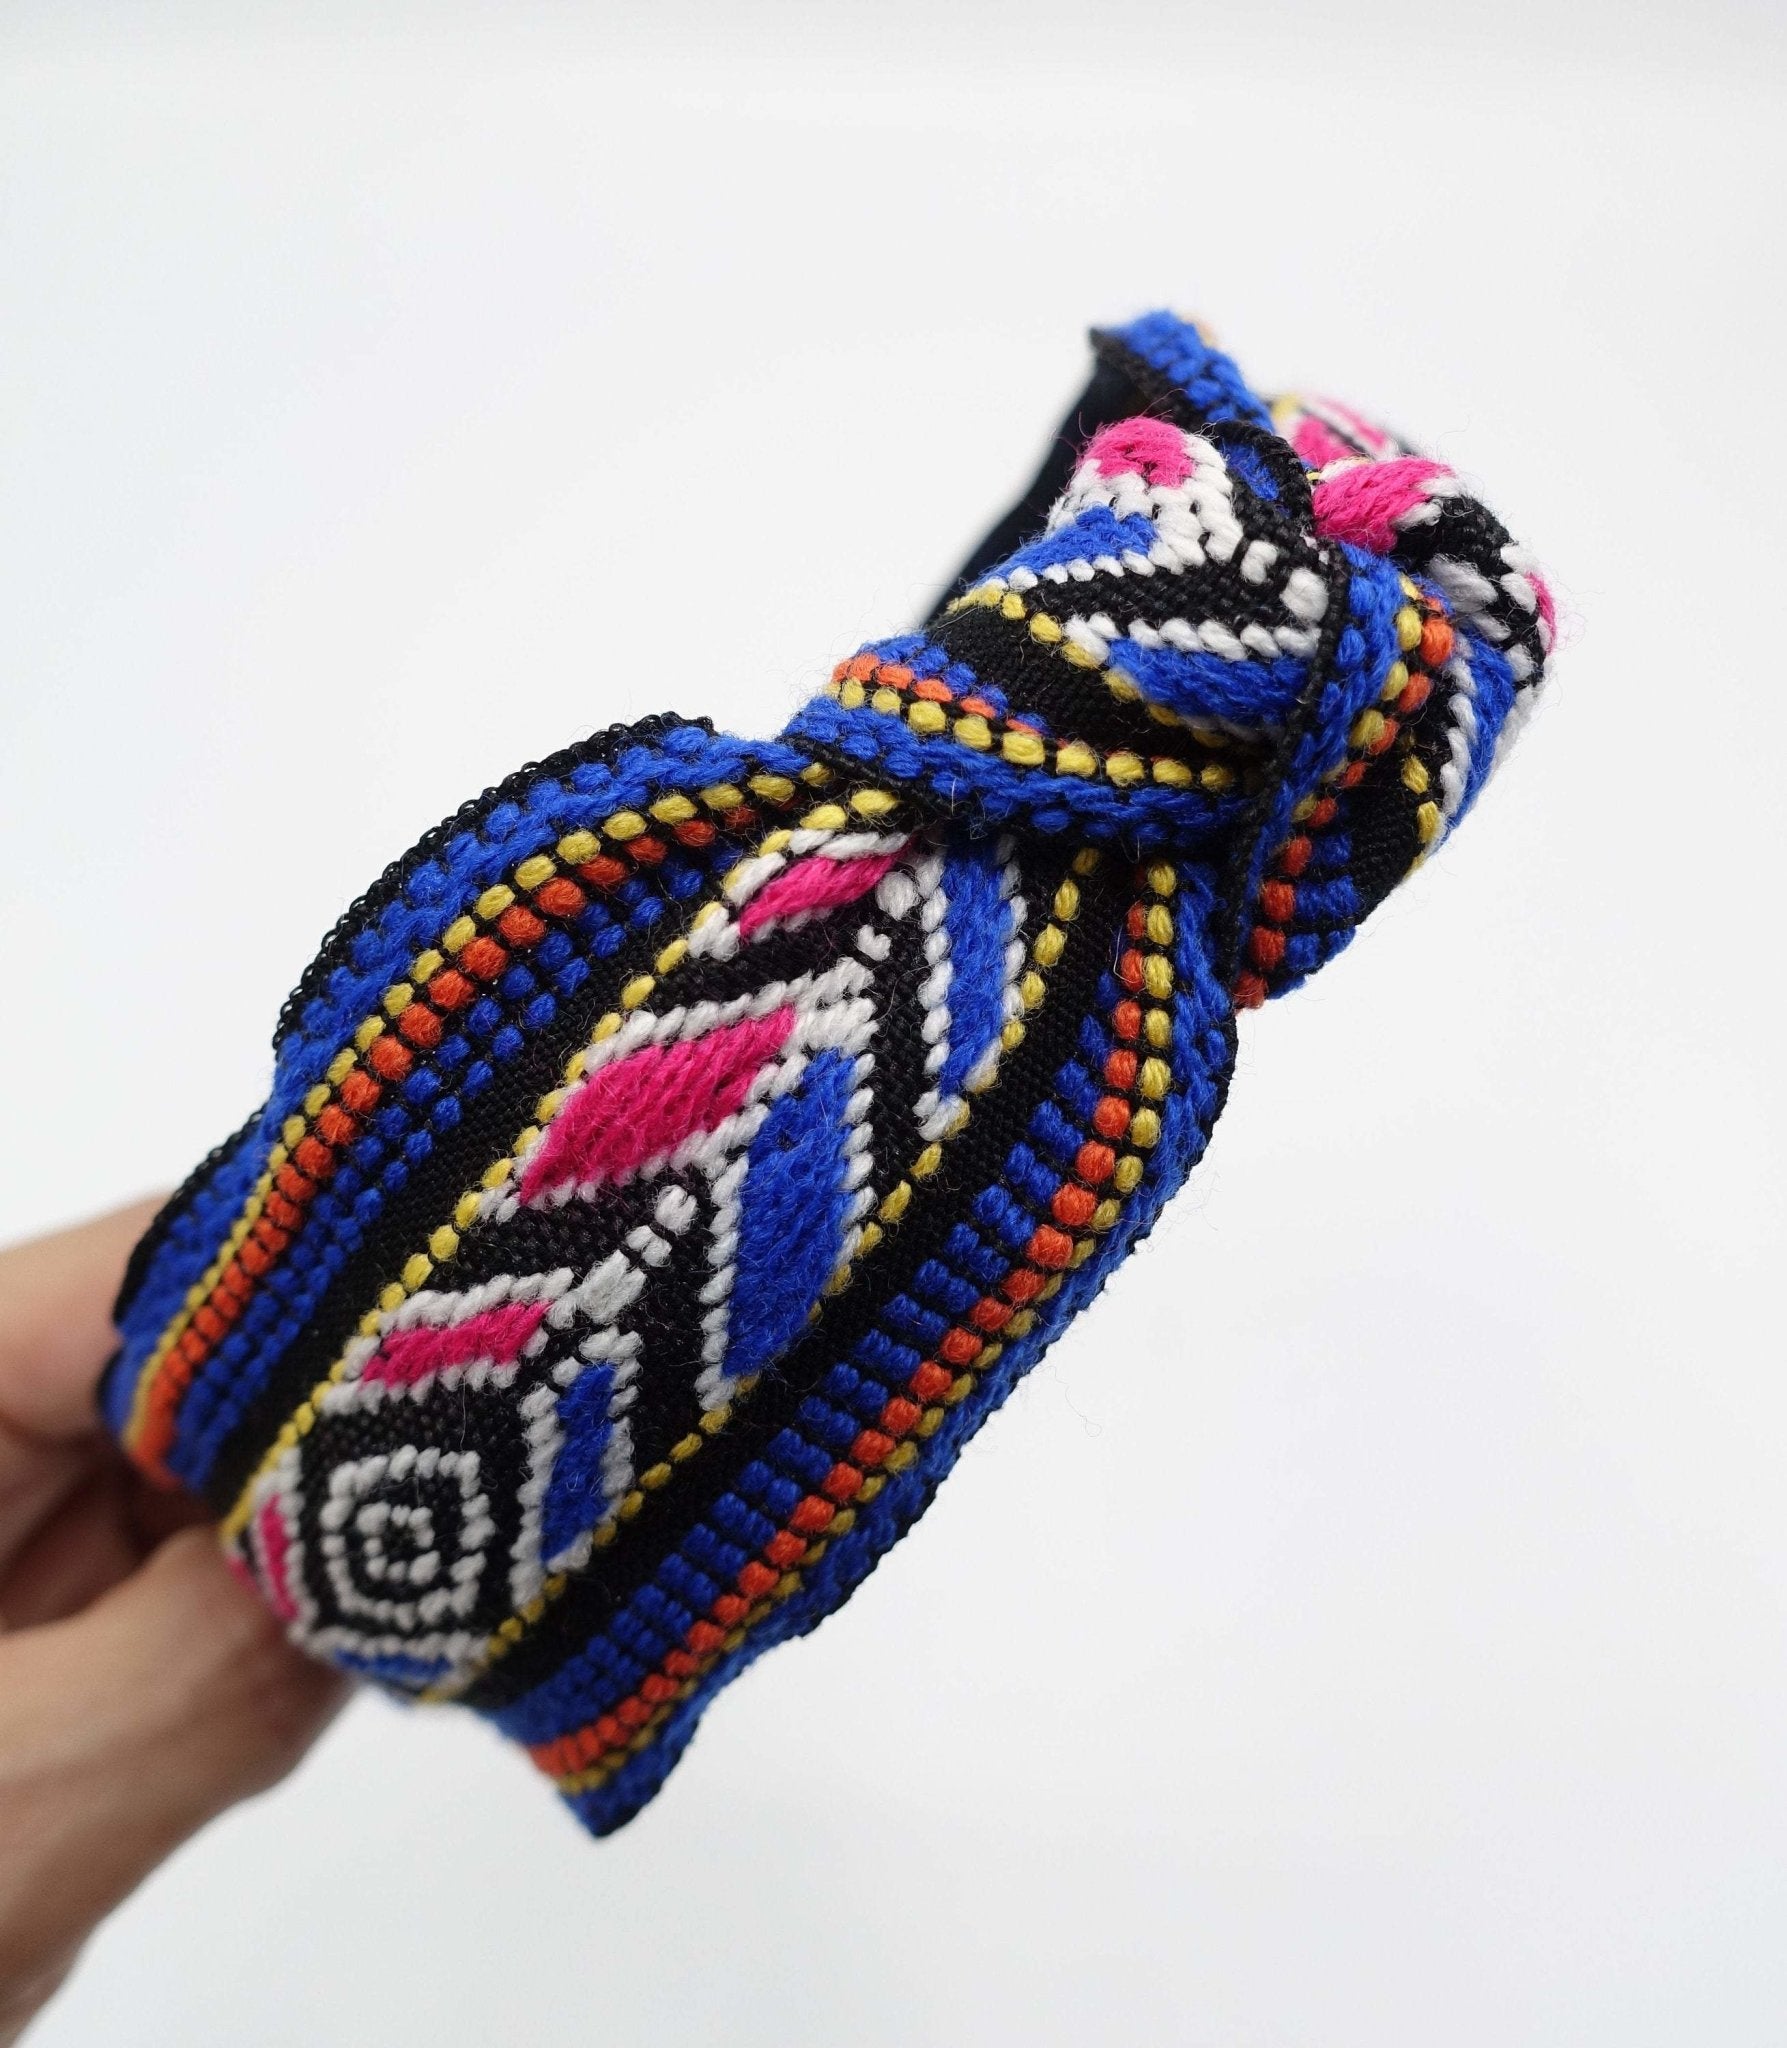 veryshine.com Headband aztec pattern headband jacquard knot hairband woman hair accessory